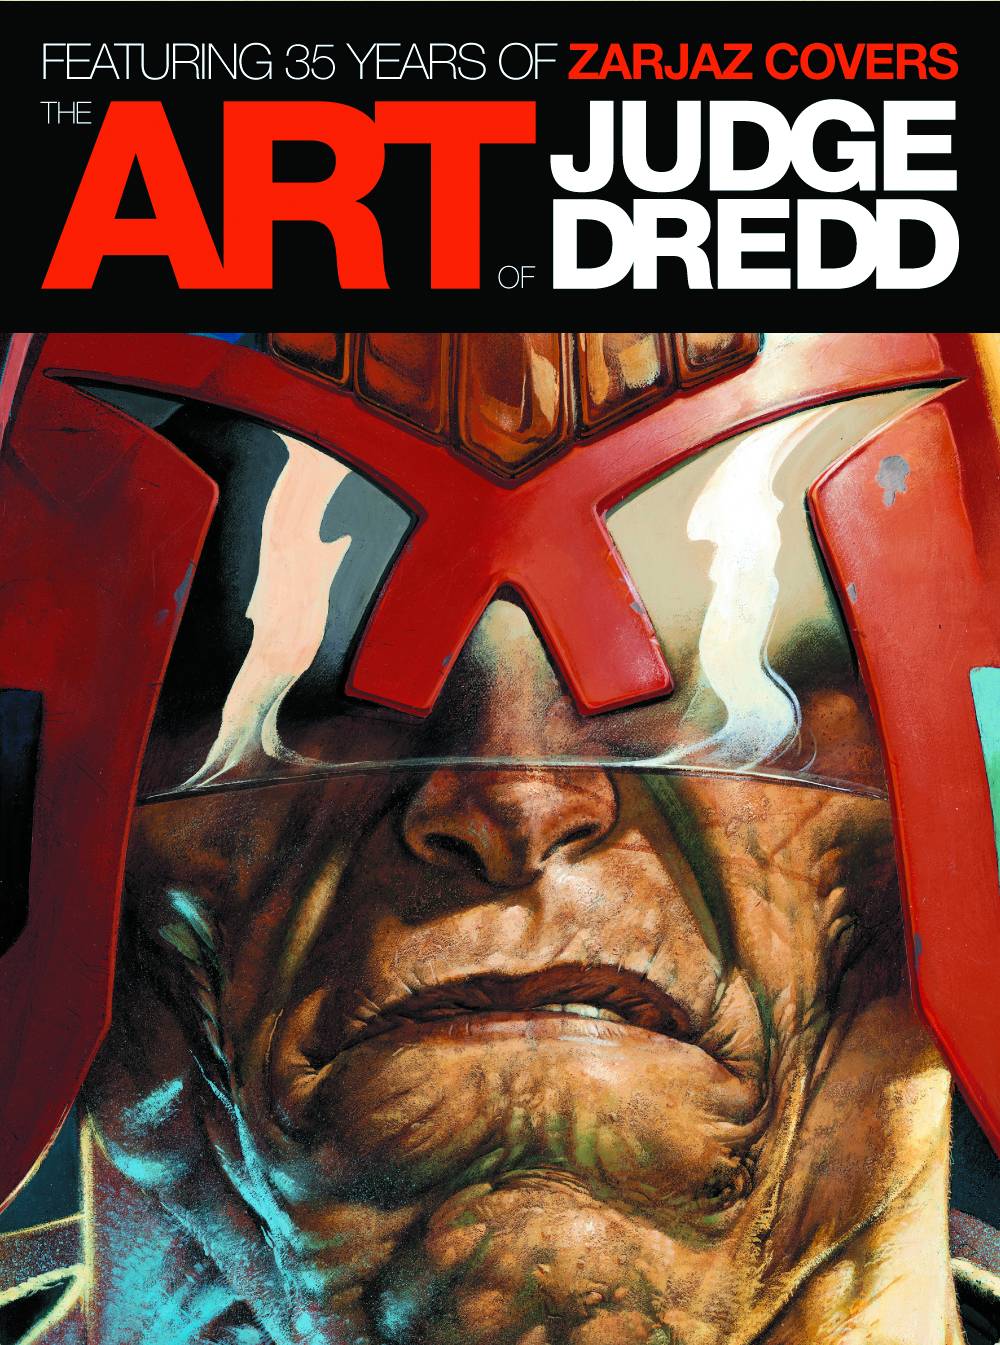 Art of Judge Dredd 35 Years Zarjaz Covers Hardcover